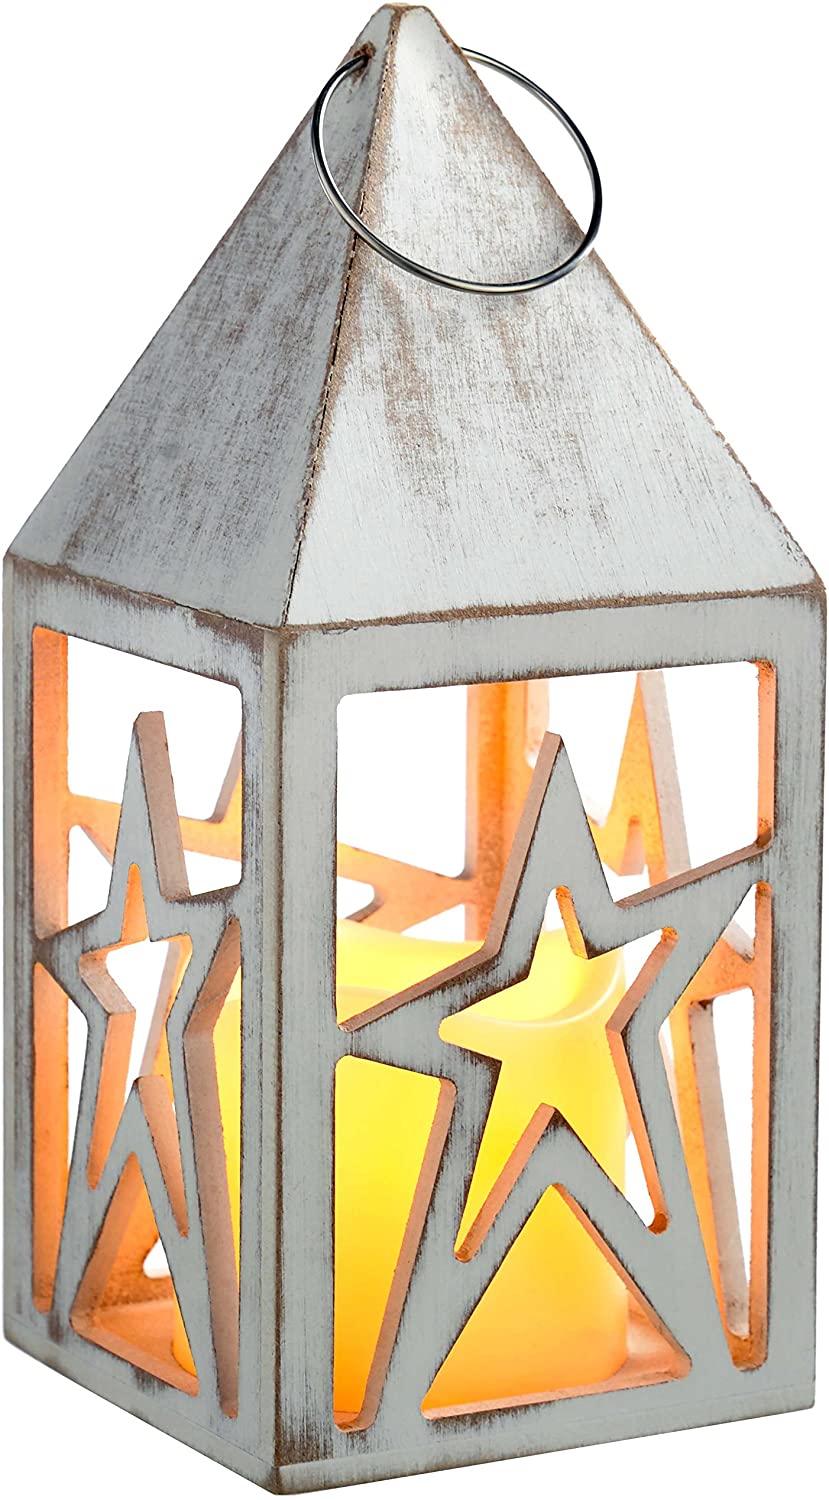 WeRChristmas 21 cm with Wood Star Lantern Christmas Decoration – Antique White